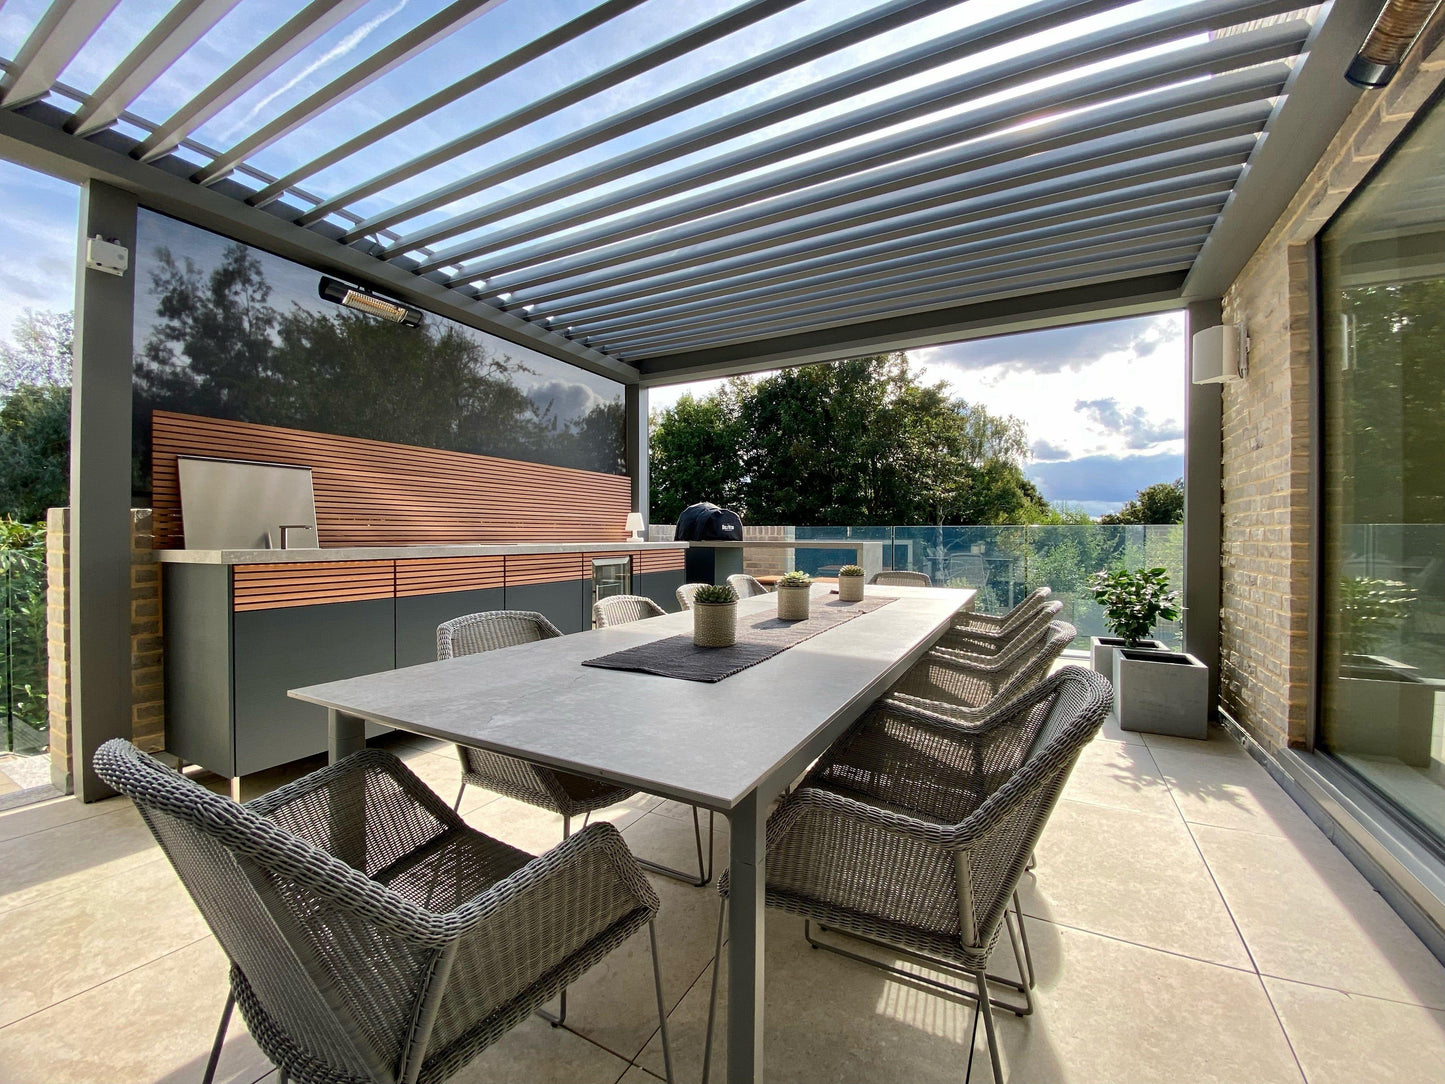 Cubic Outdoor Living Kitchen - C2 Style - Garden House Design